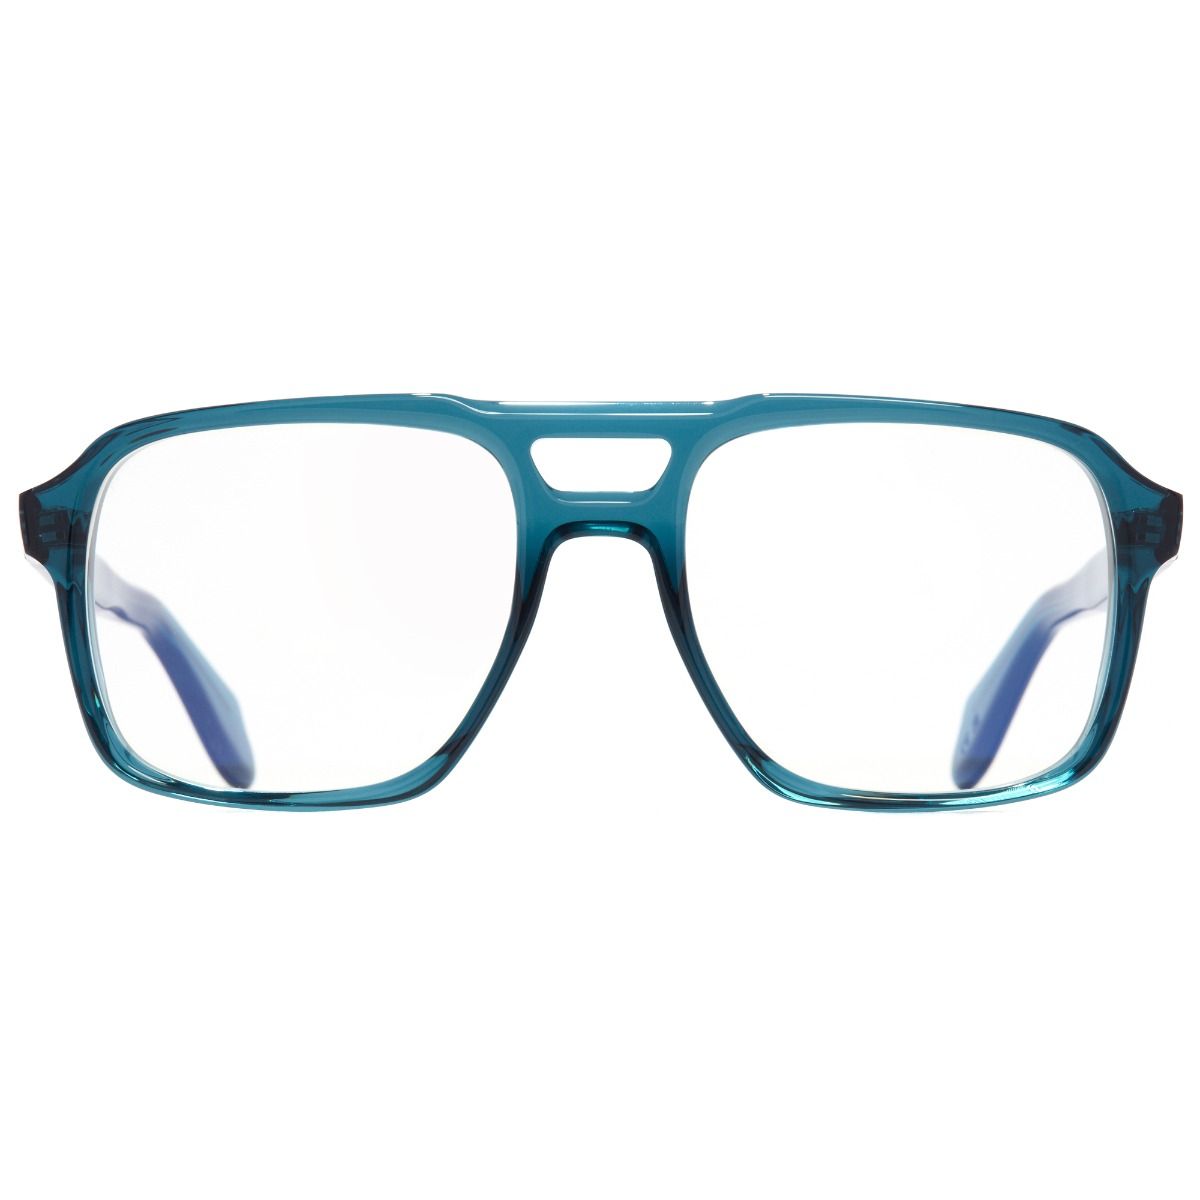 1394 Optical Aviator Glasses (Small) - Tribeca Teal